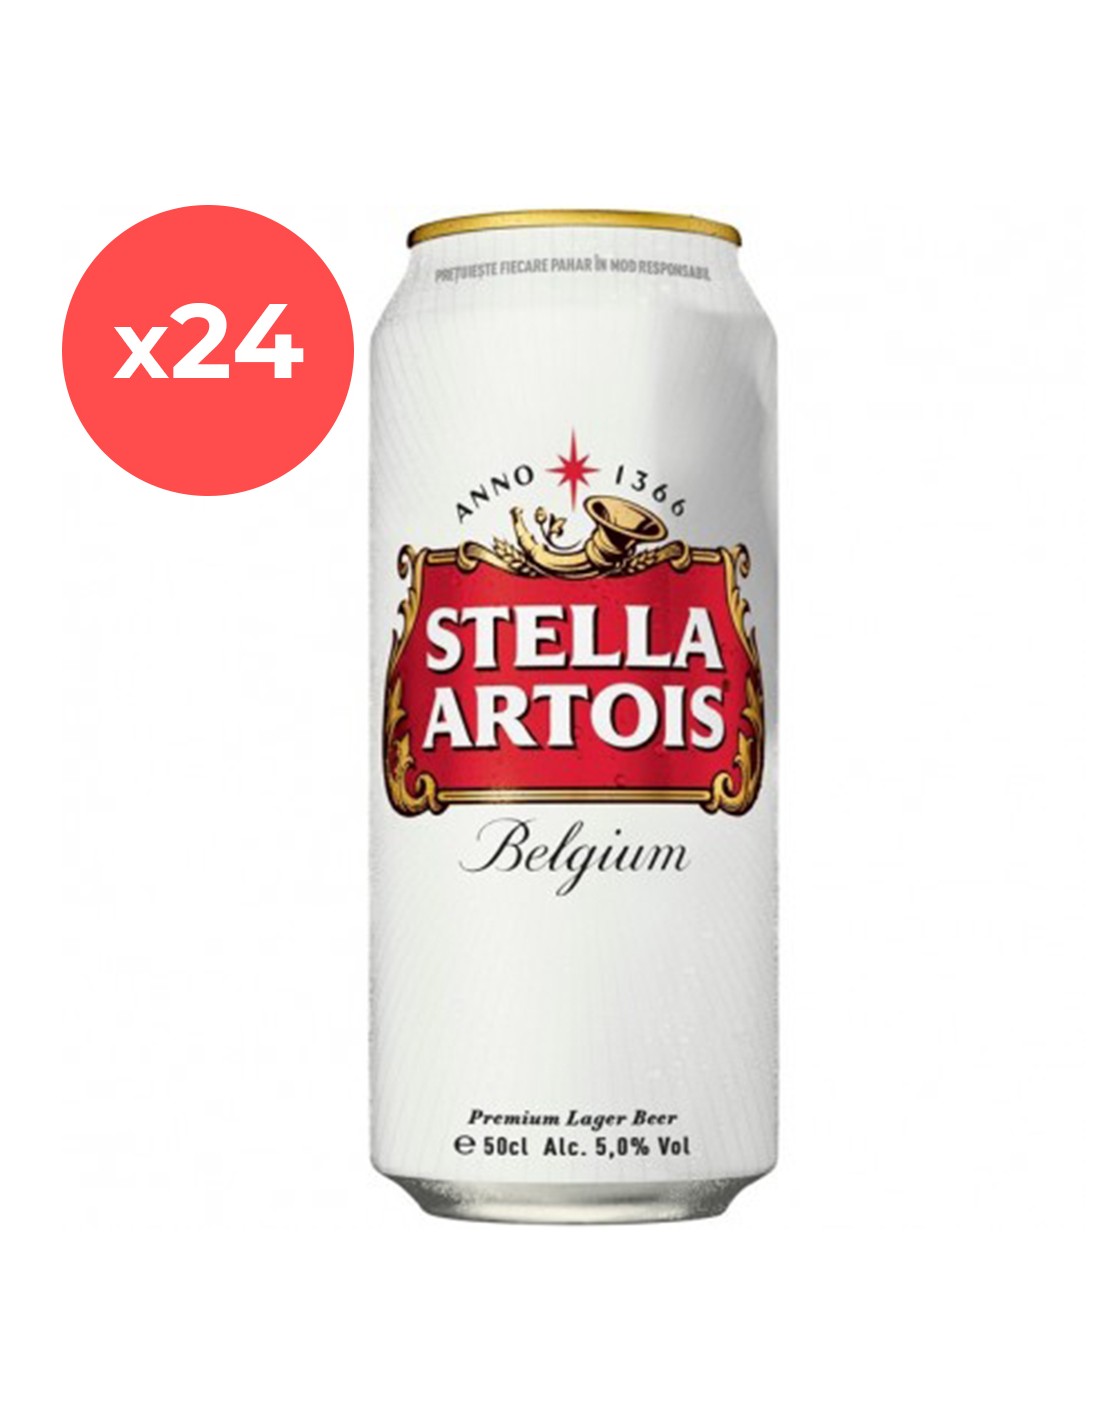 Bax 24 bucati bere blonda Stella Artois, 5% alc., 0.5L, doza, Romania alcooldiscount.ro